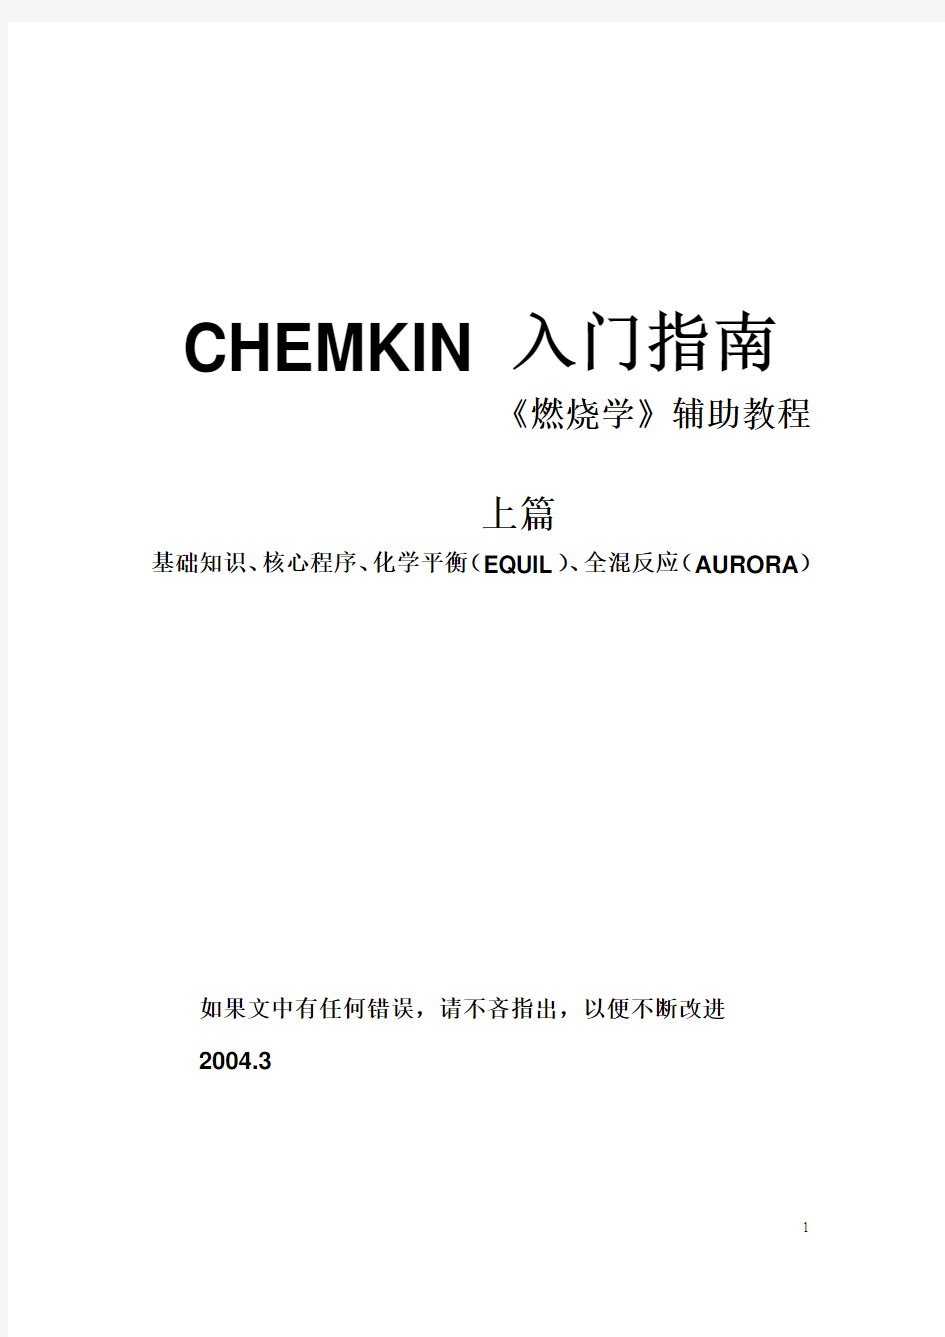 CHEMKIN4.0.1入门指南